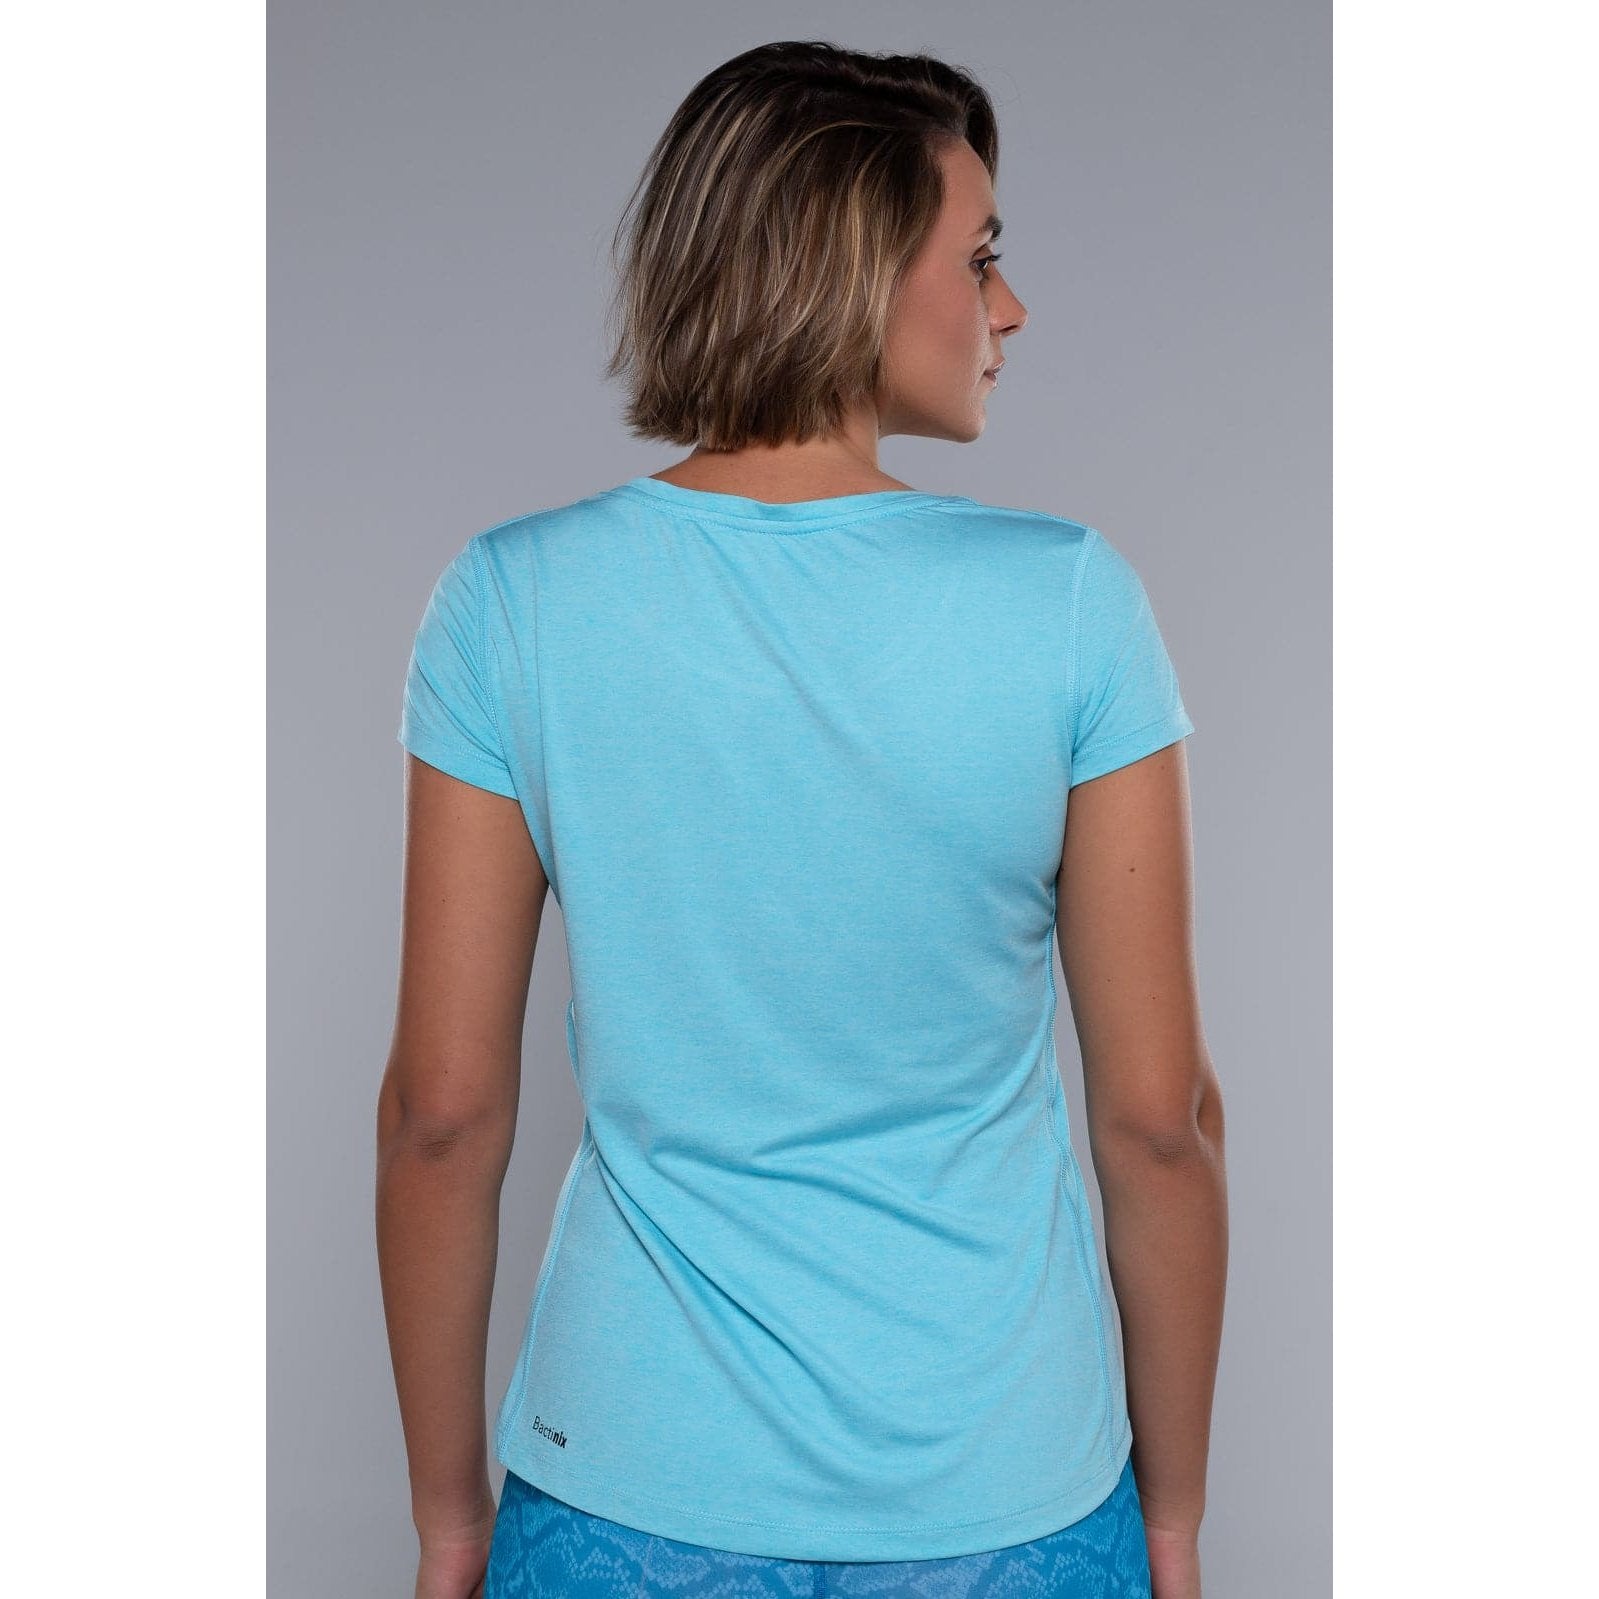 Comfort T-Shirt in Light Blue - Sporty Pro